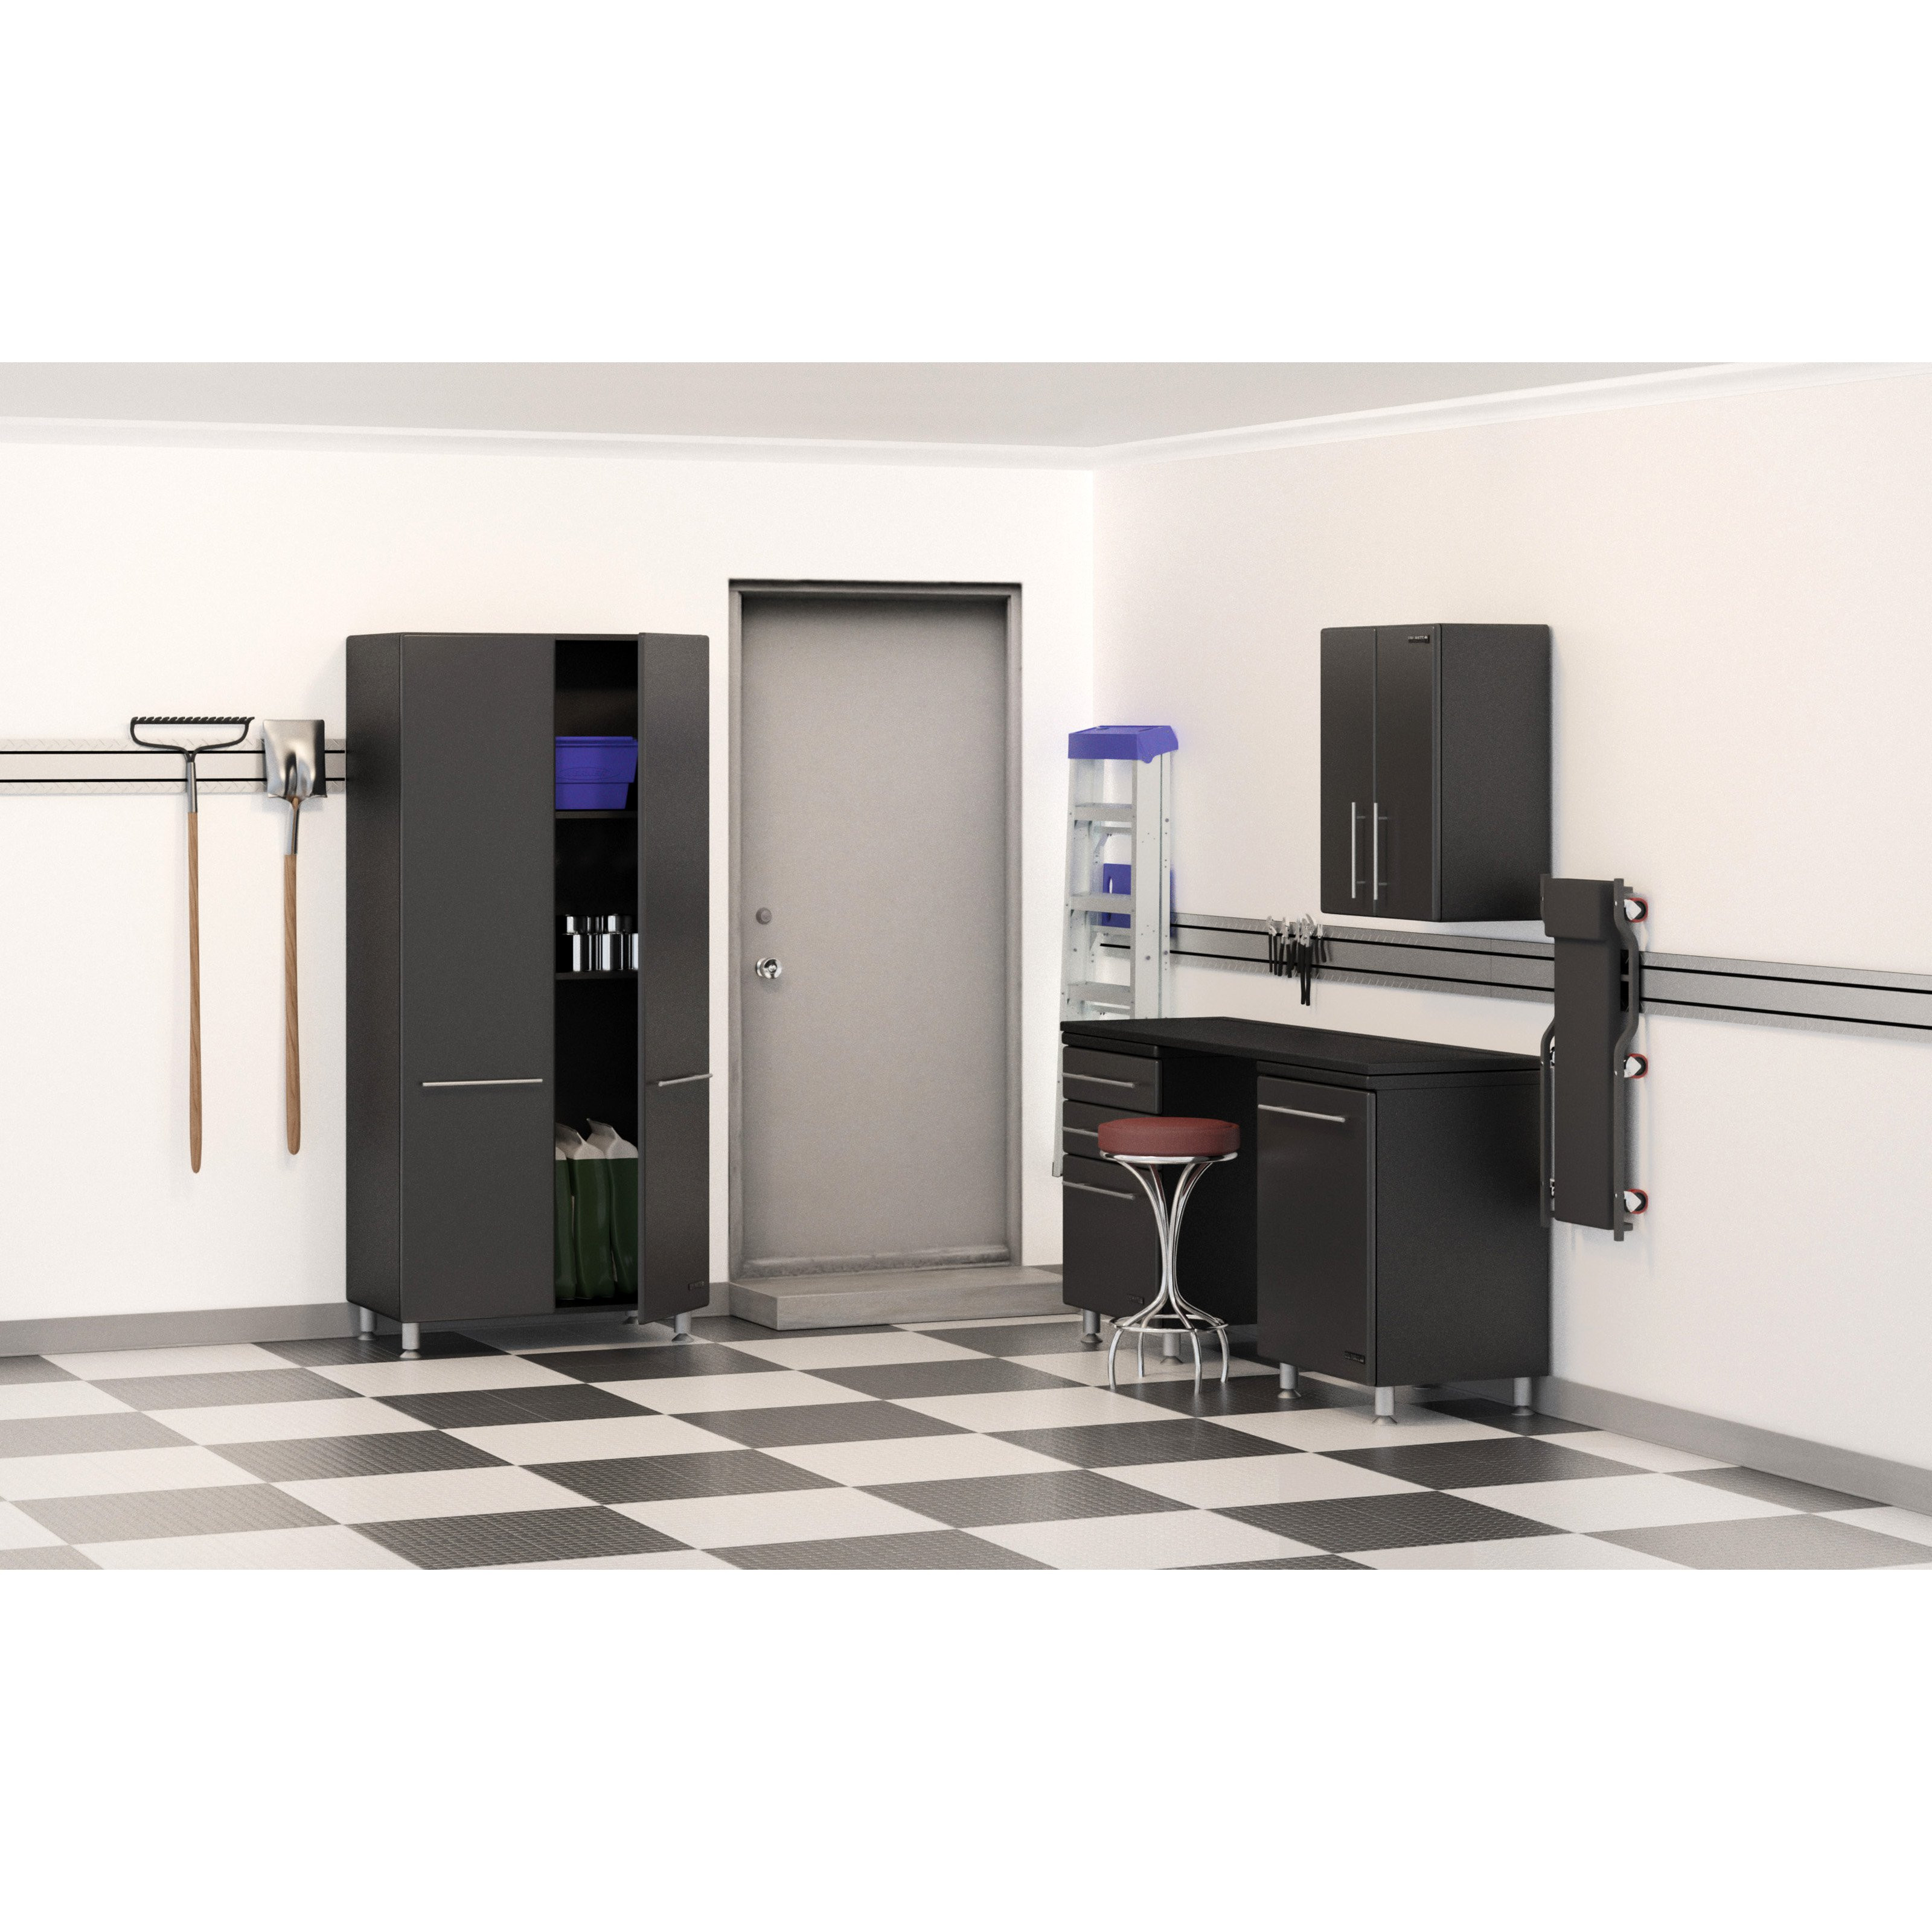 Best ideas about Garage Storage System
. Save or Pin Ulti MATE GA 50 5 Piece Garage Storage System Cabinets Now.